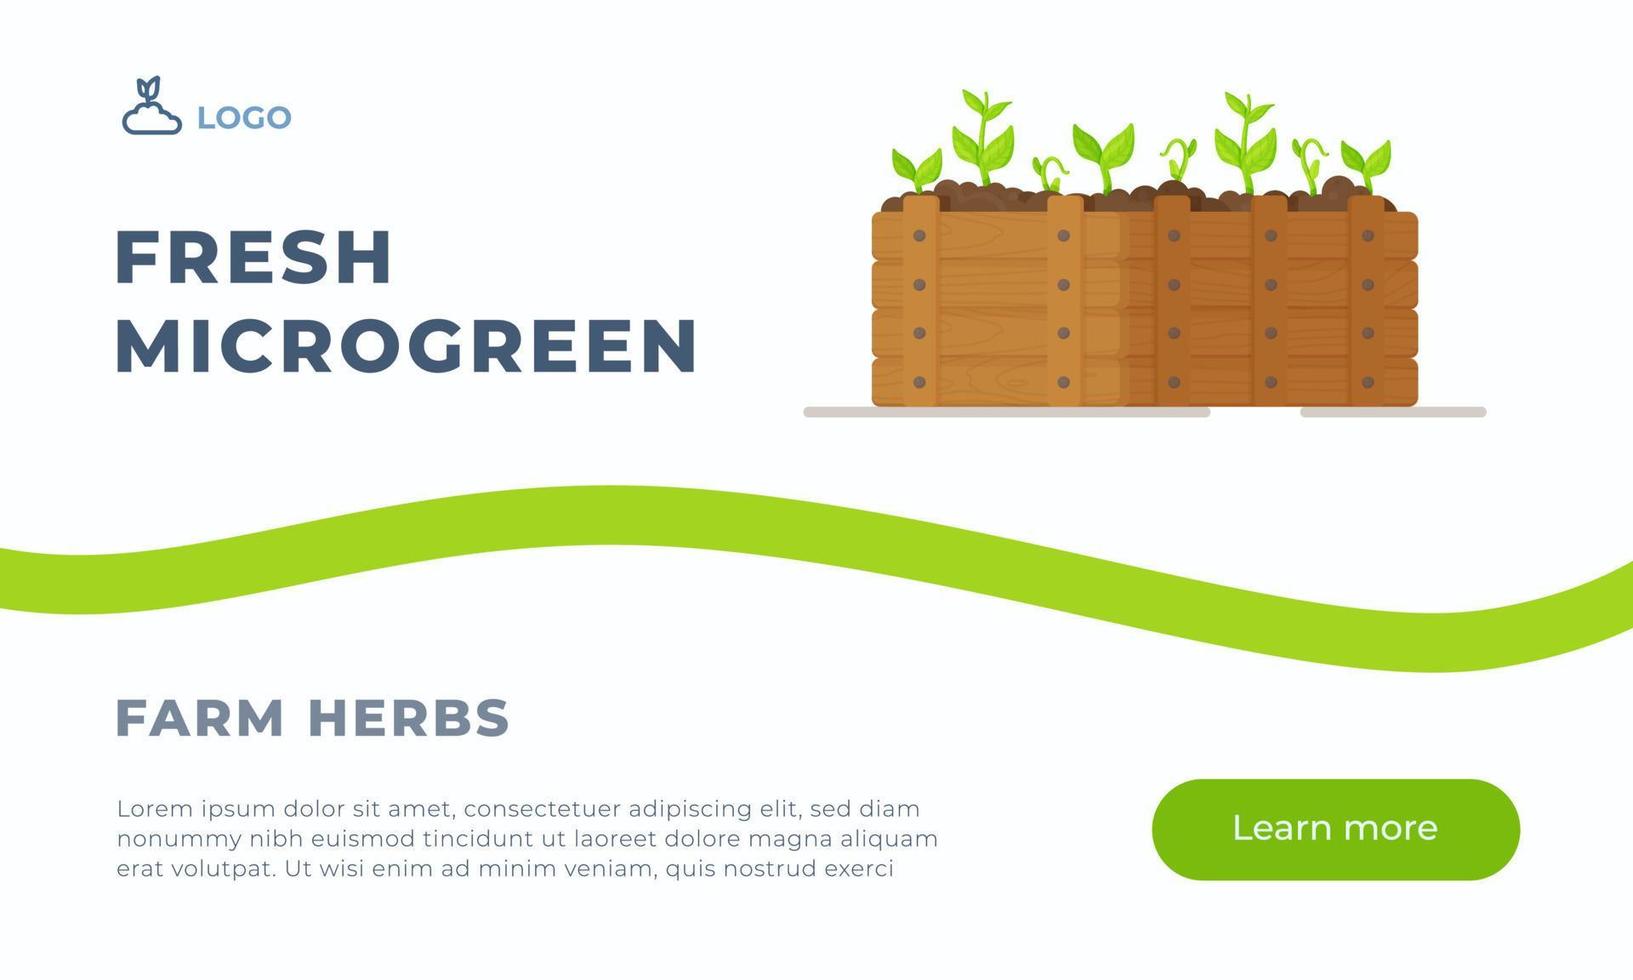 ilustración vectorial de microverde fresco. microgreen como verduras que crecen en una caja de madera. vector